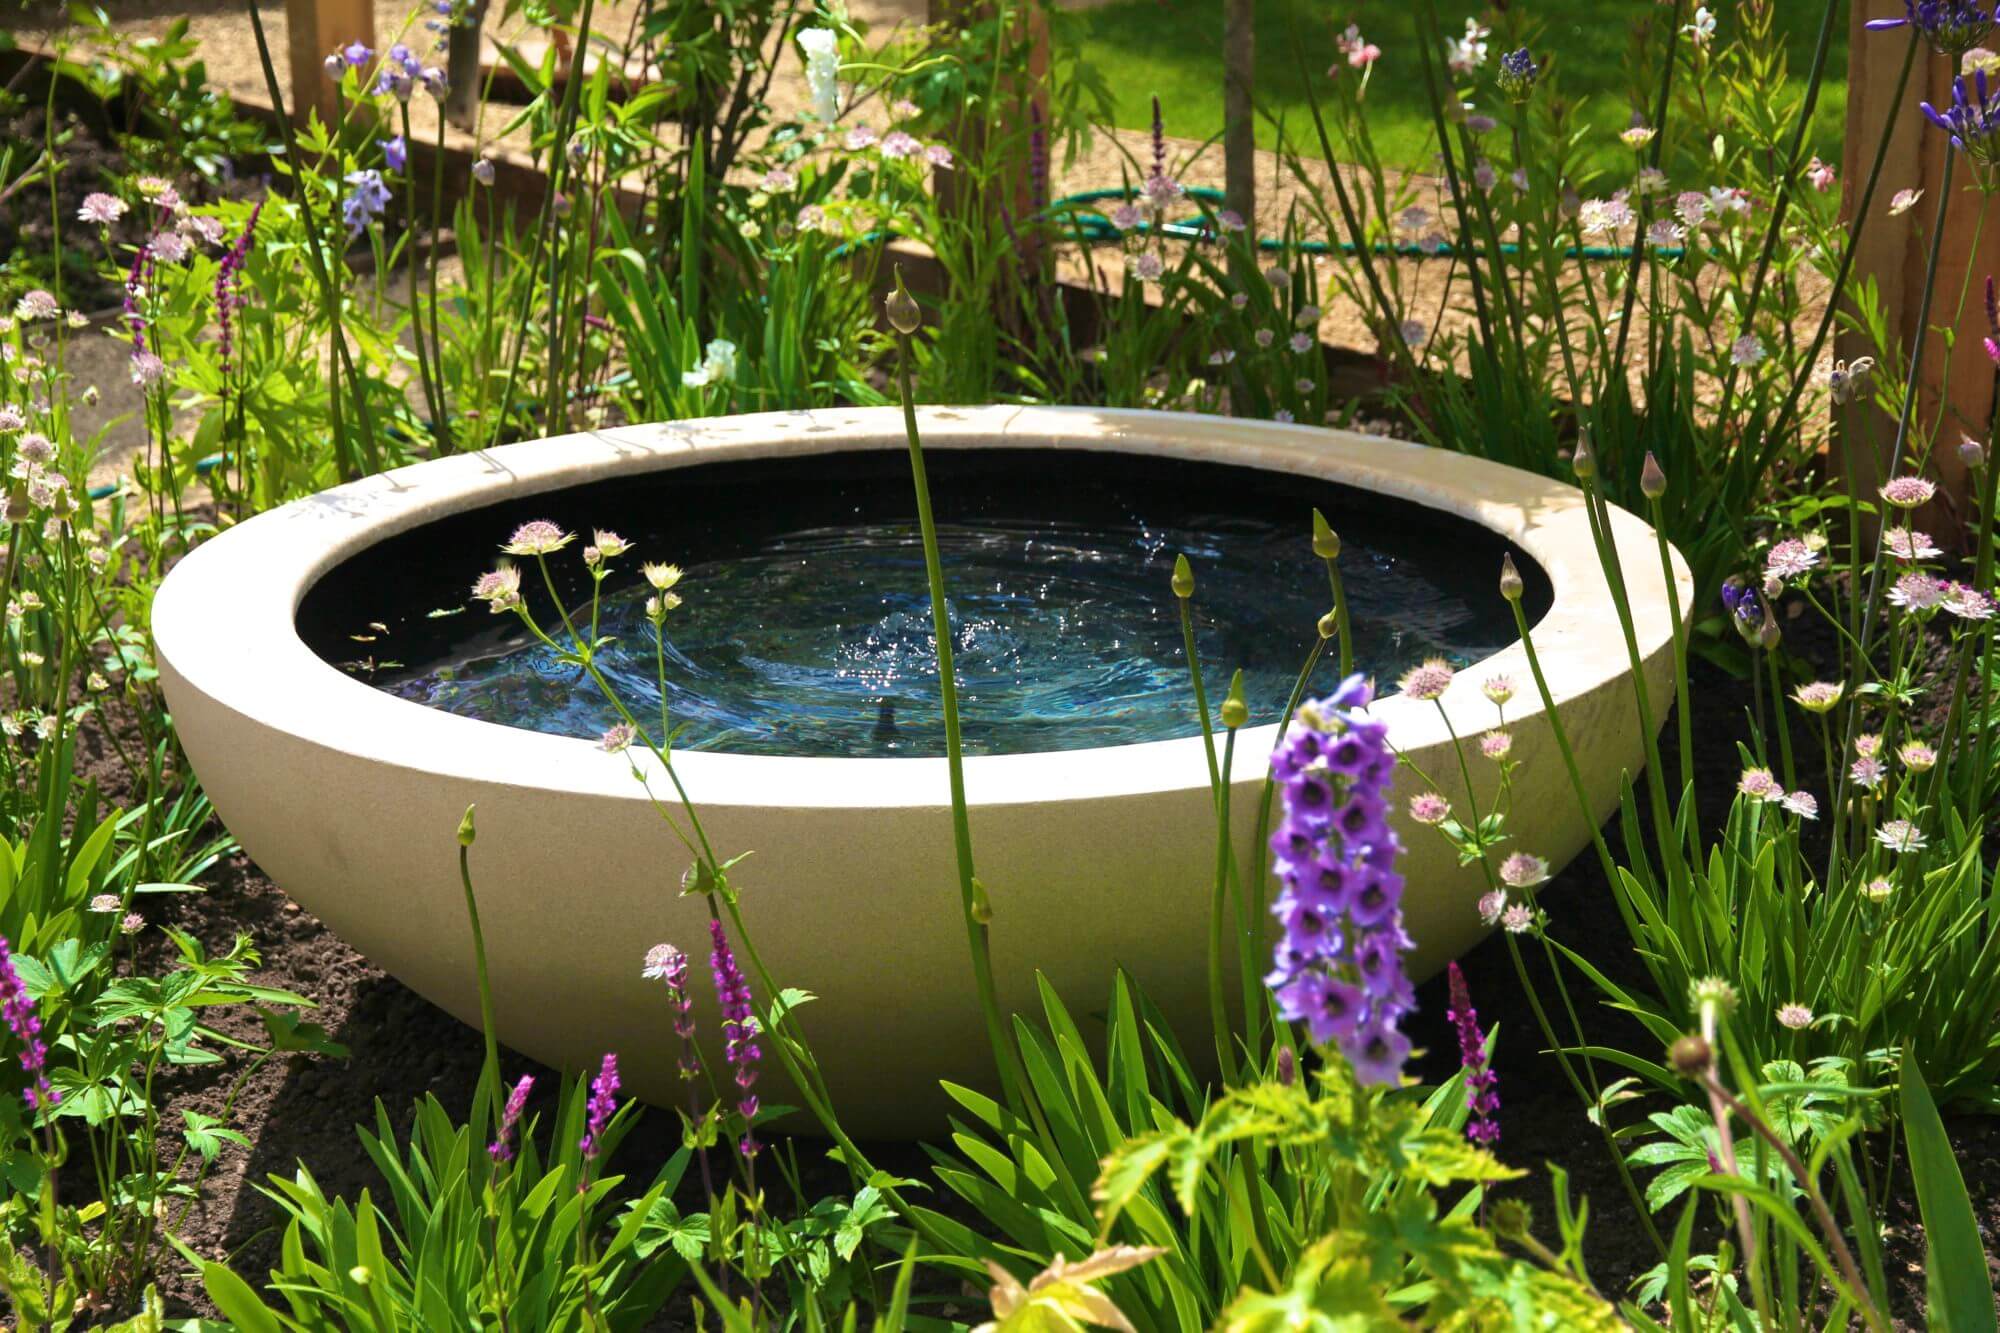 blu water in a water feature bowl in garden of flowers